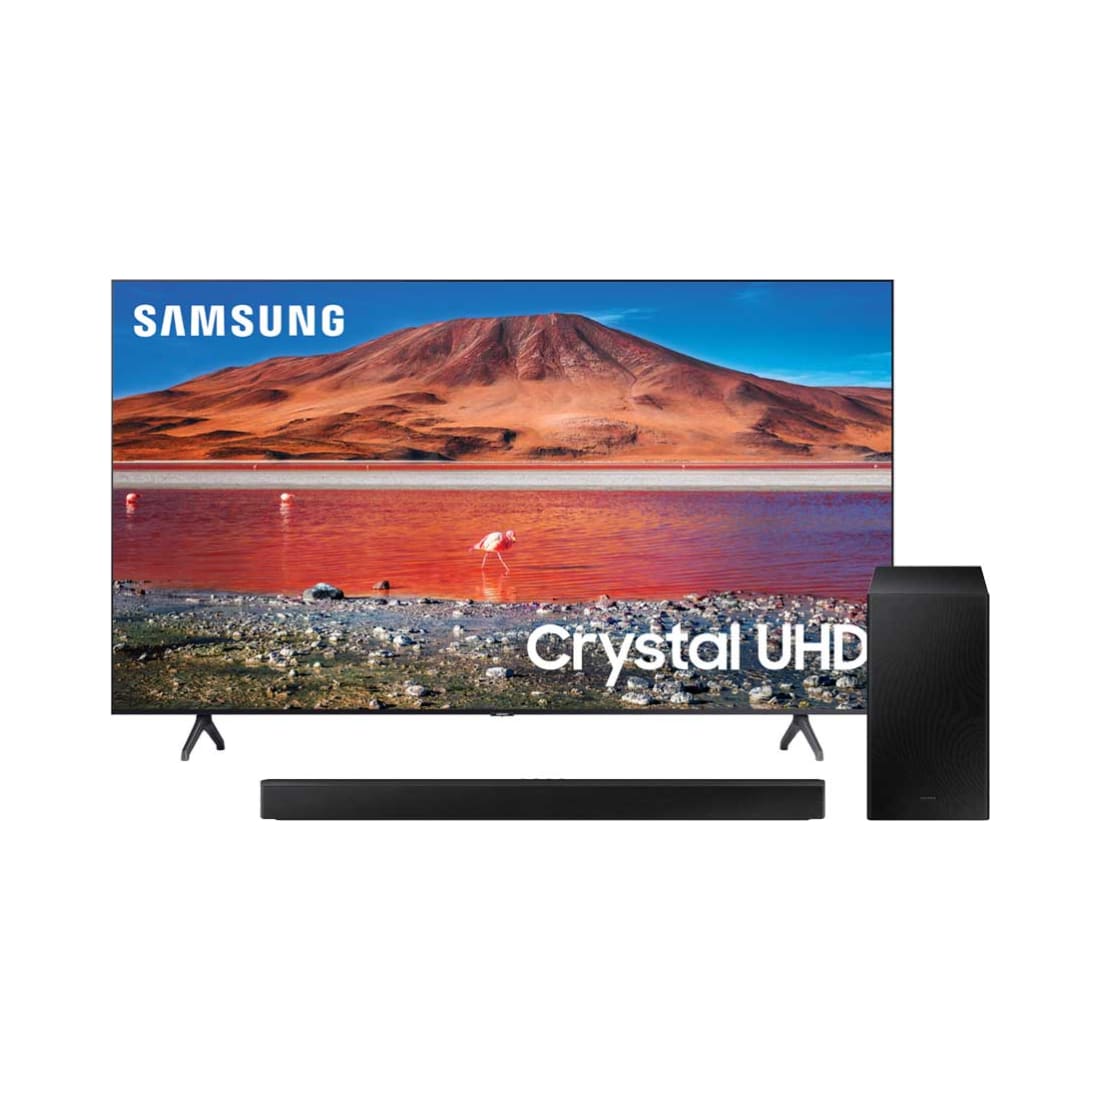 Samsung 65" TU7000 Crystal UHD 4K Smart TV Bundle - UN65TU7000BUNDLE